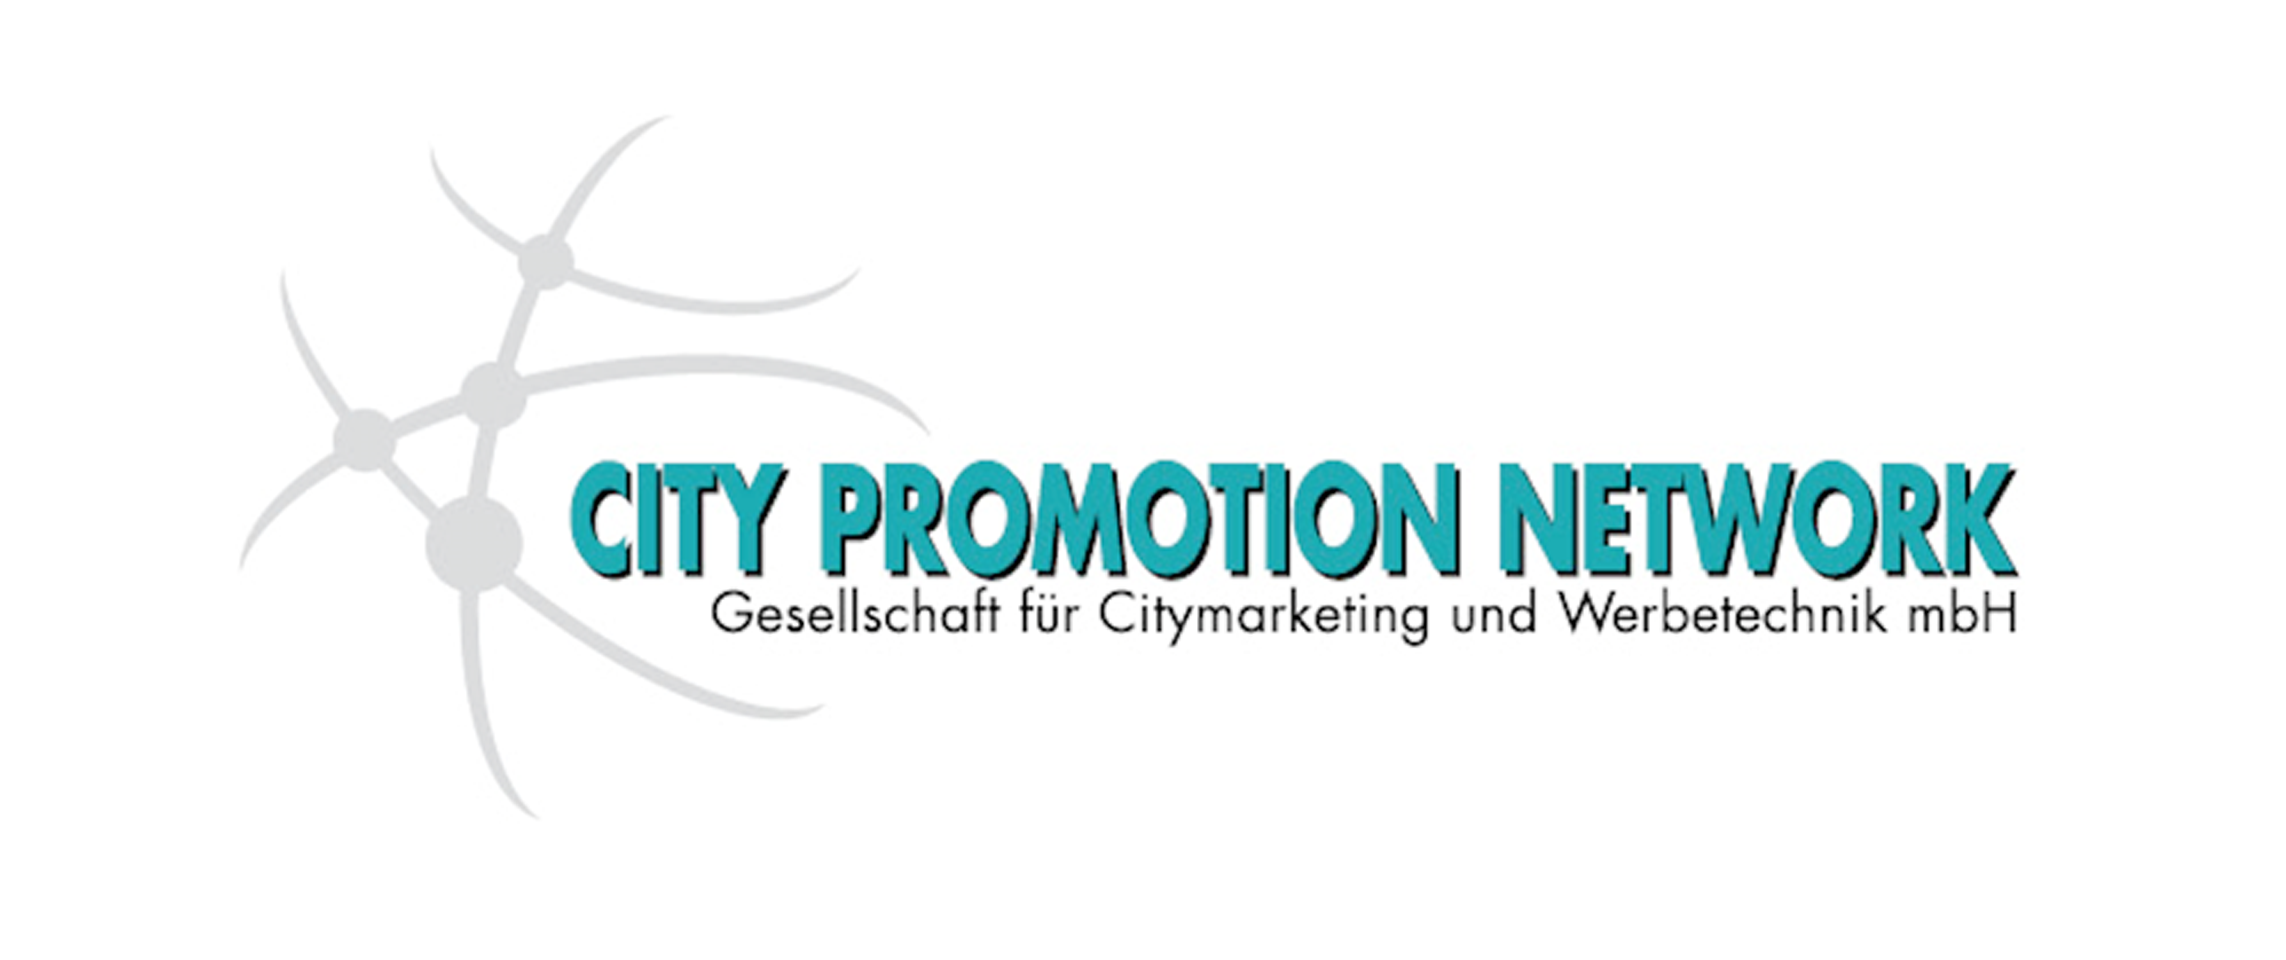 City Promotion Network